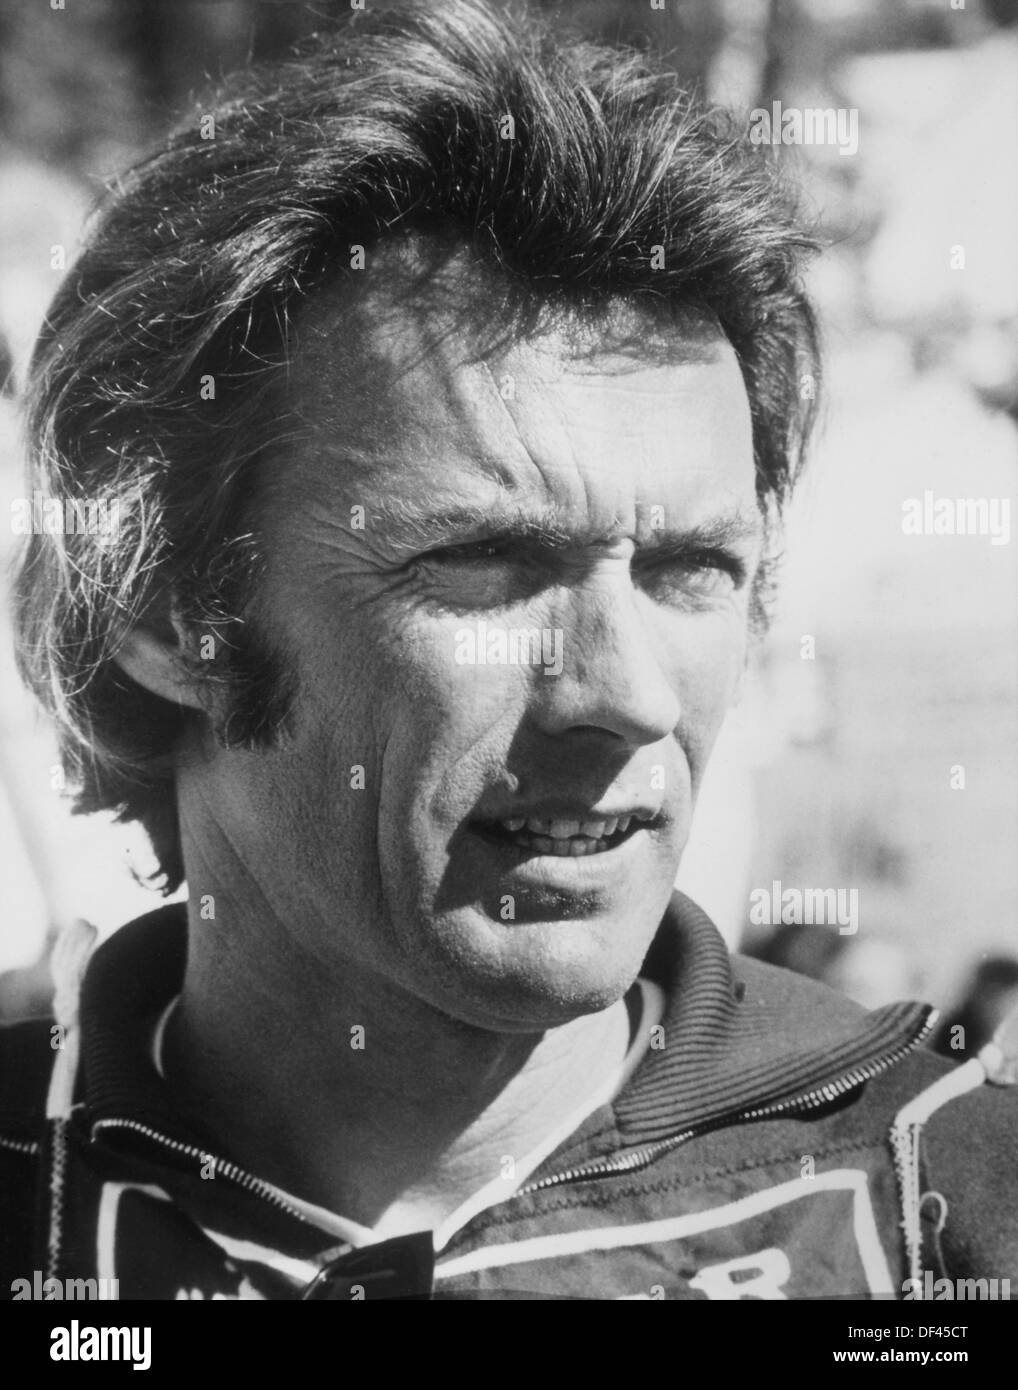 Schauspieler Clint Eastwood, Studio, Porträt, 1970 Stockfoto